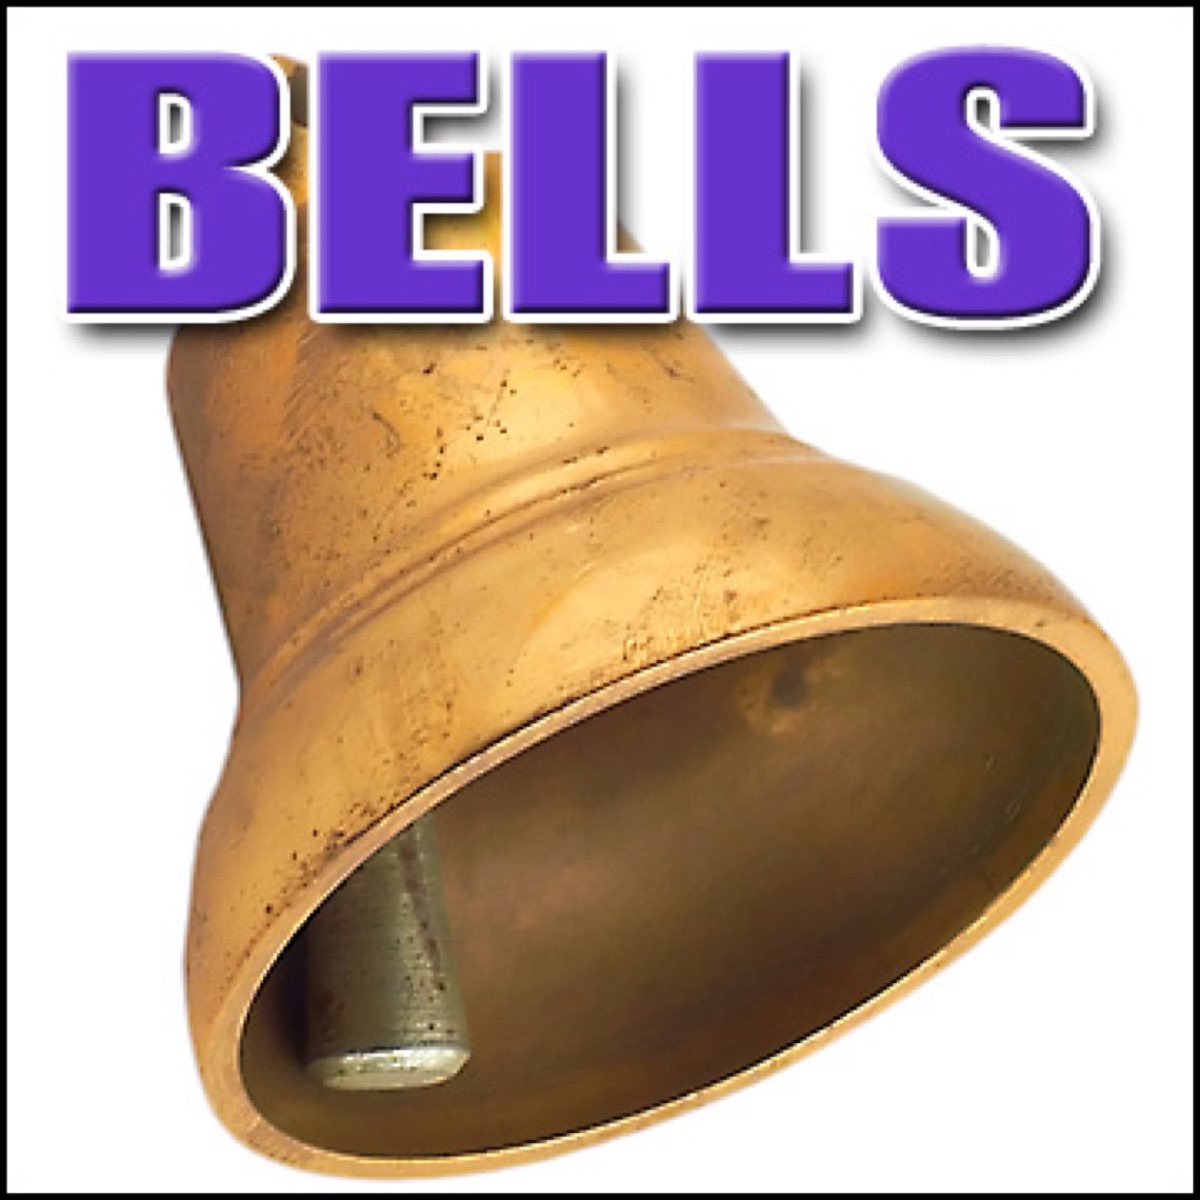 The Bells Are Ringing - ViolinSchool.com